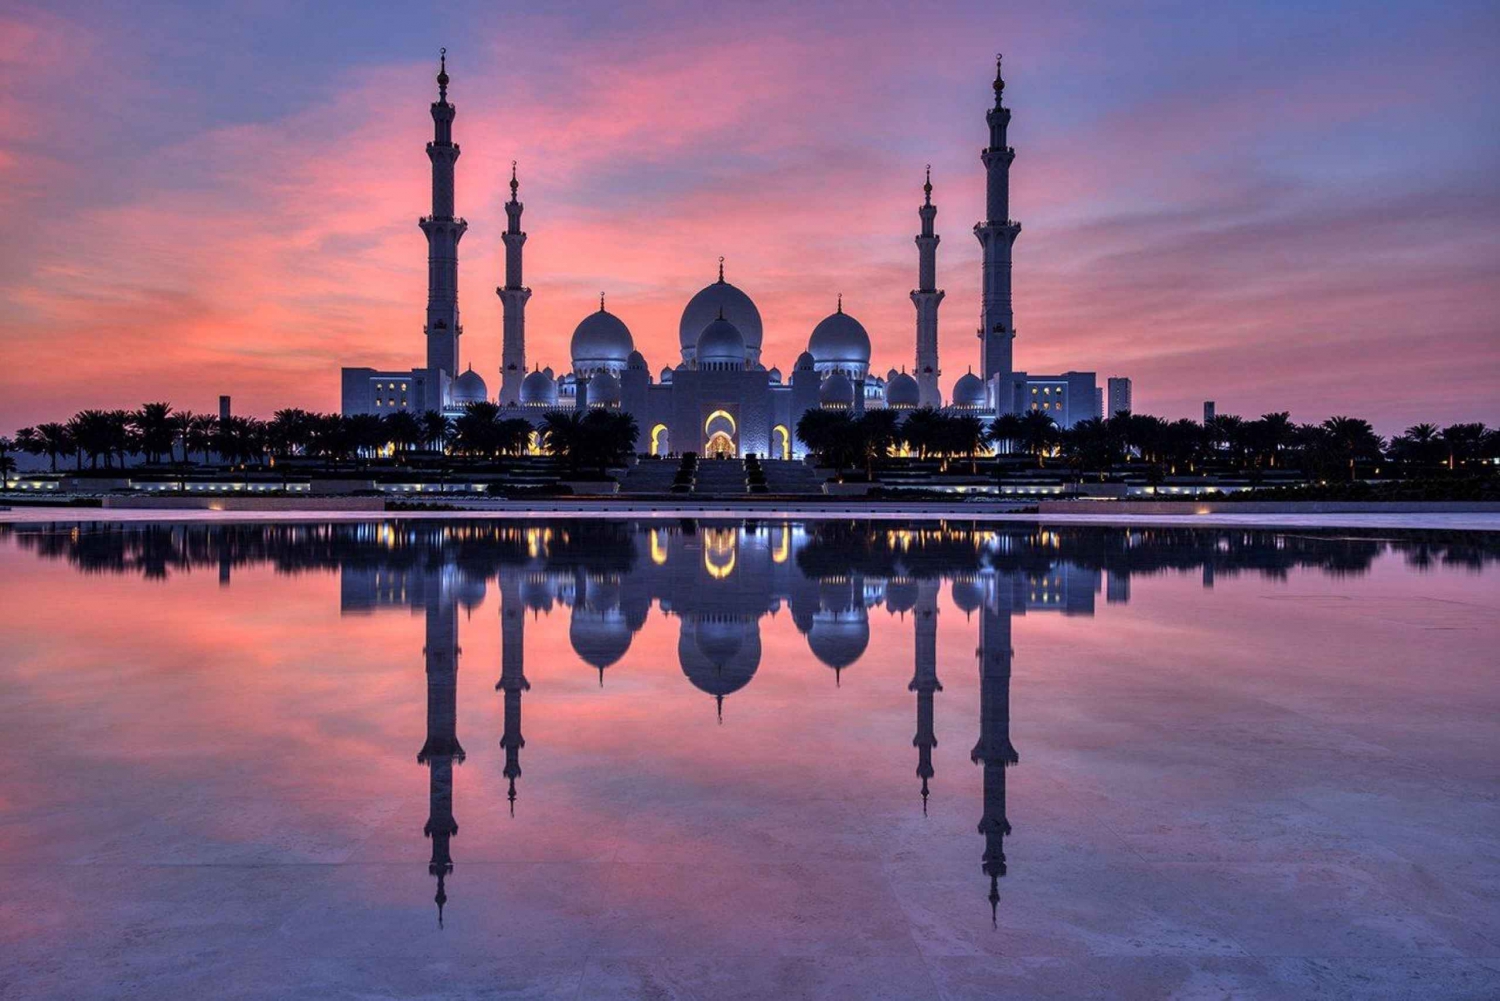 From Dubai: Abu Dhabi Premium Sightseen Full-Day Tour